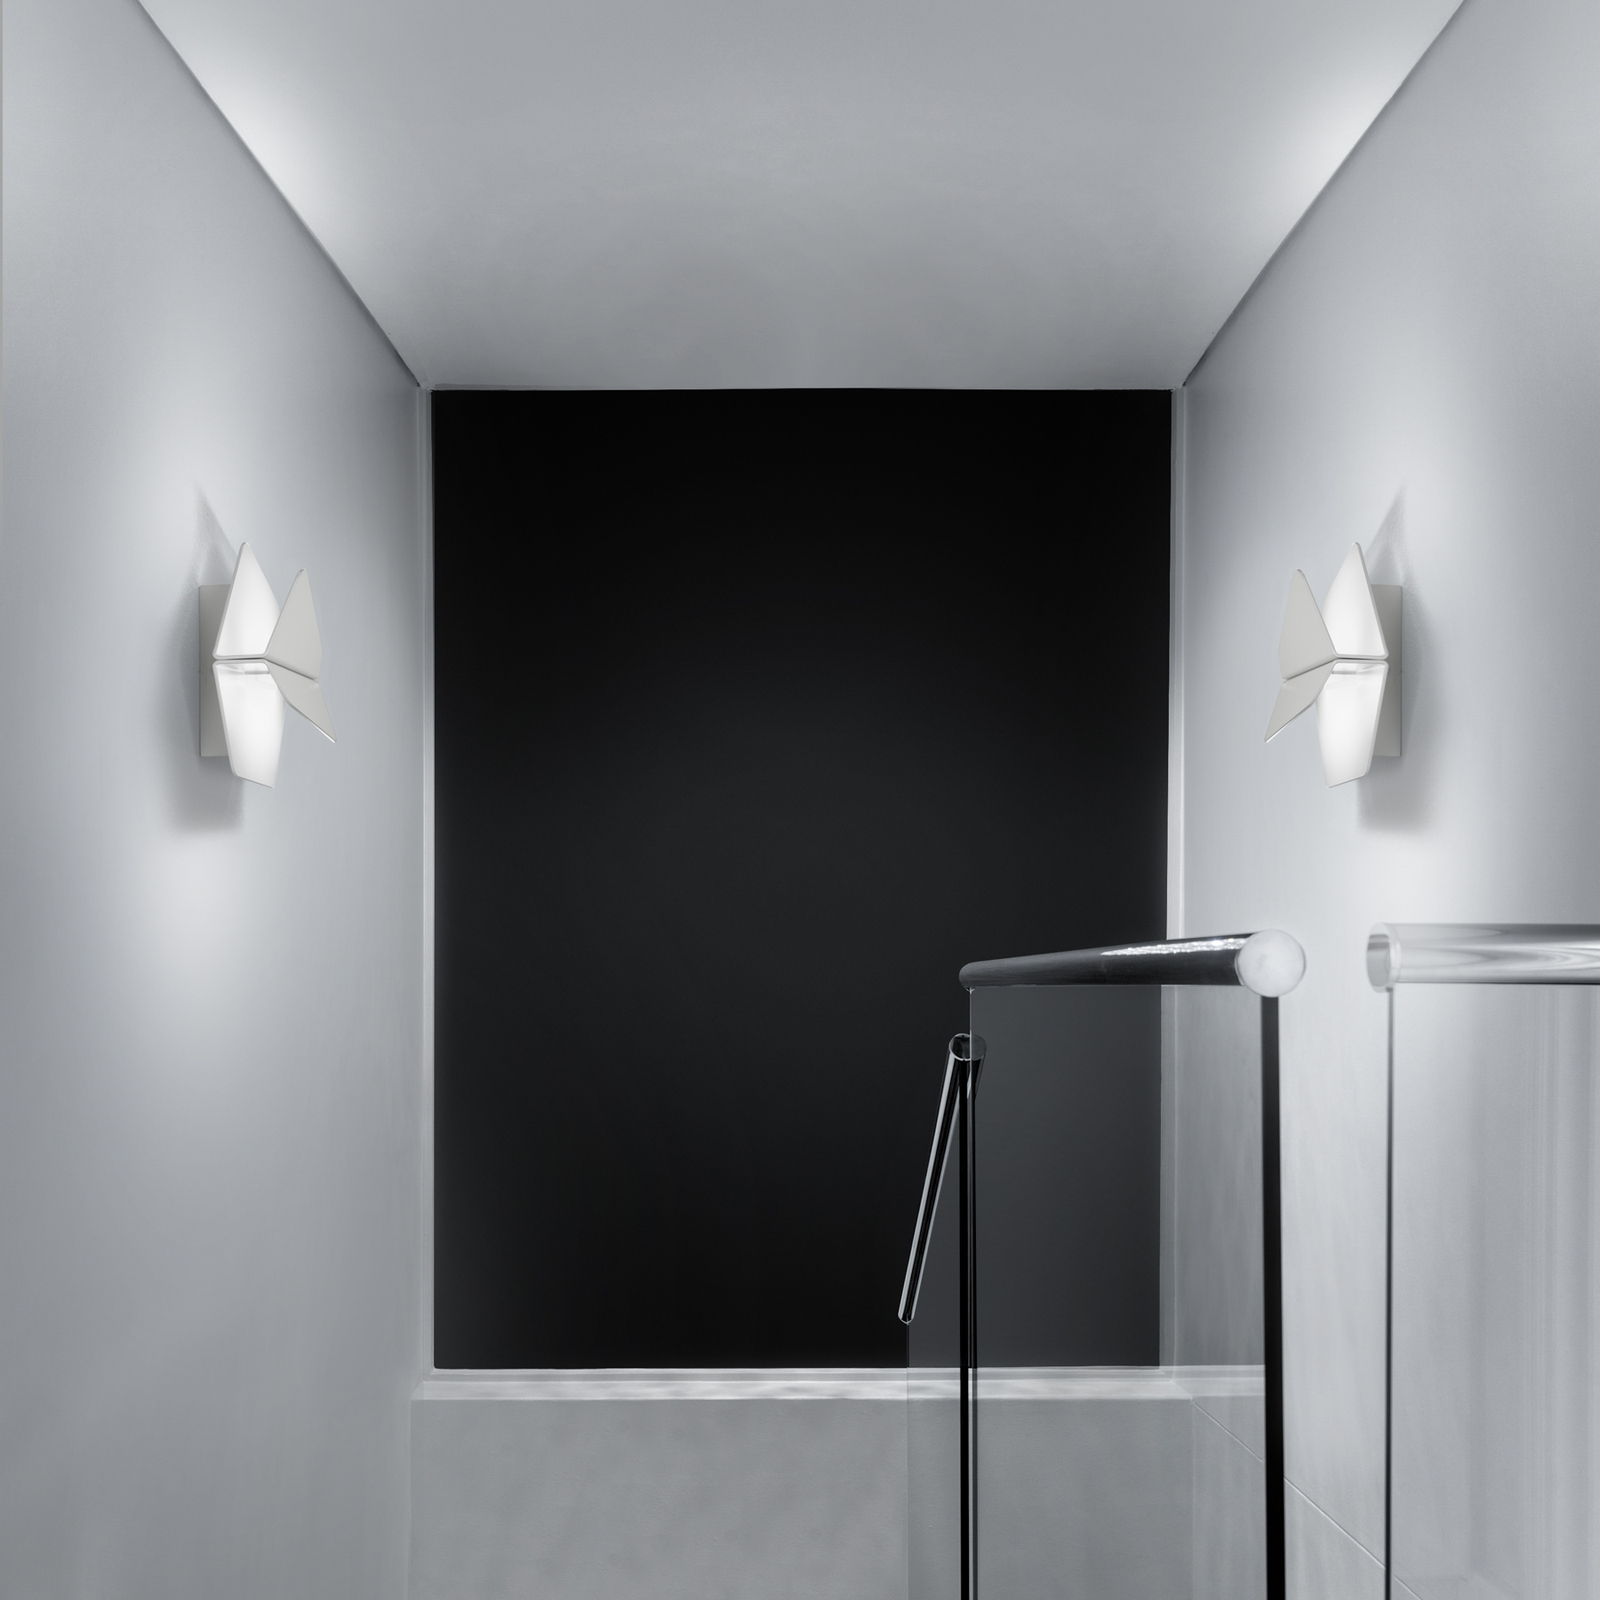 Prandina Dolomite W1 LED 3-set 2,700 K black/white